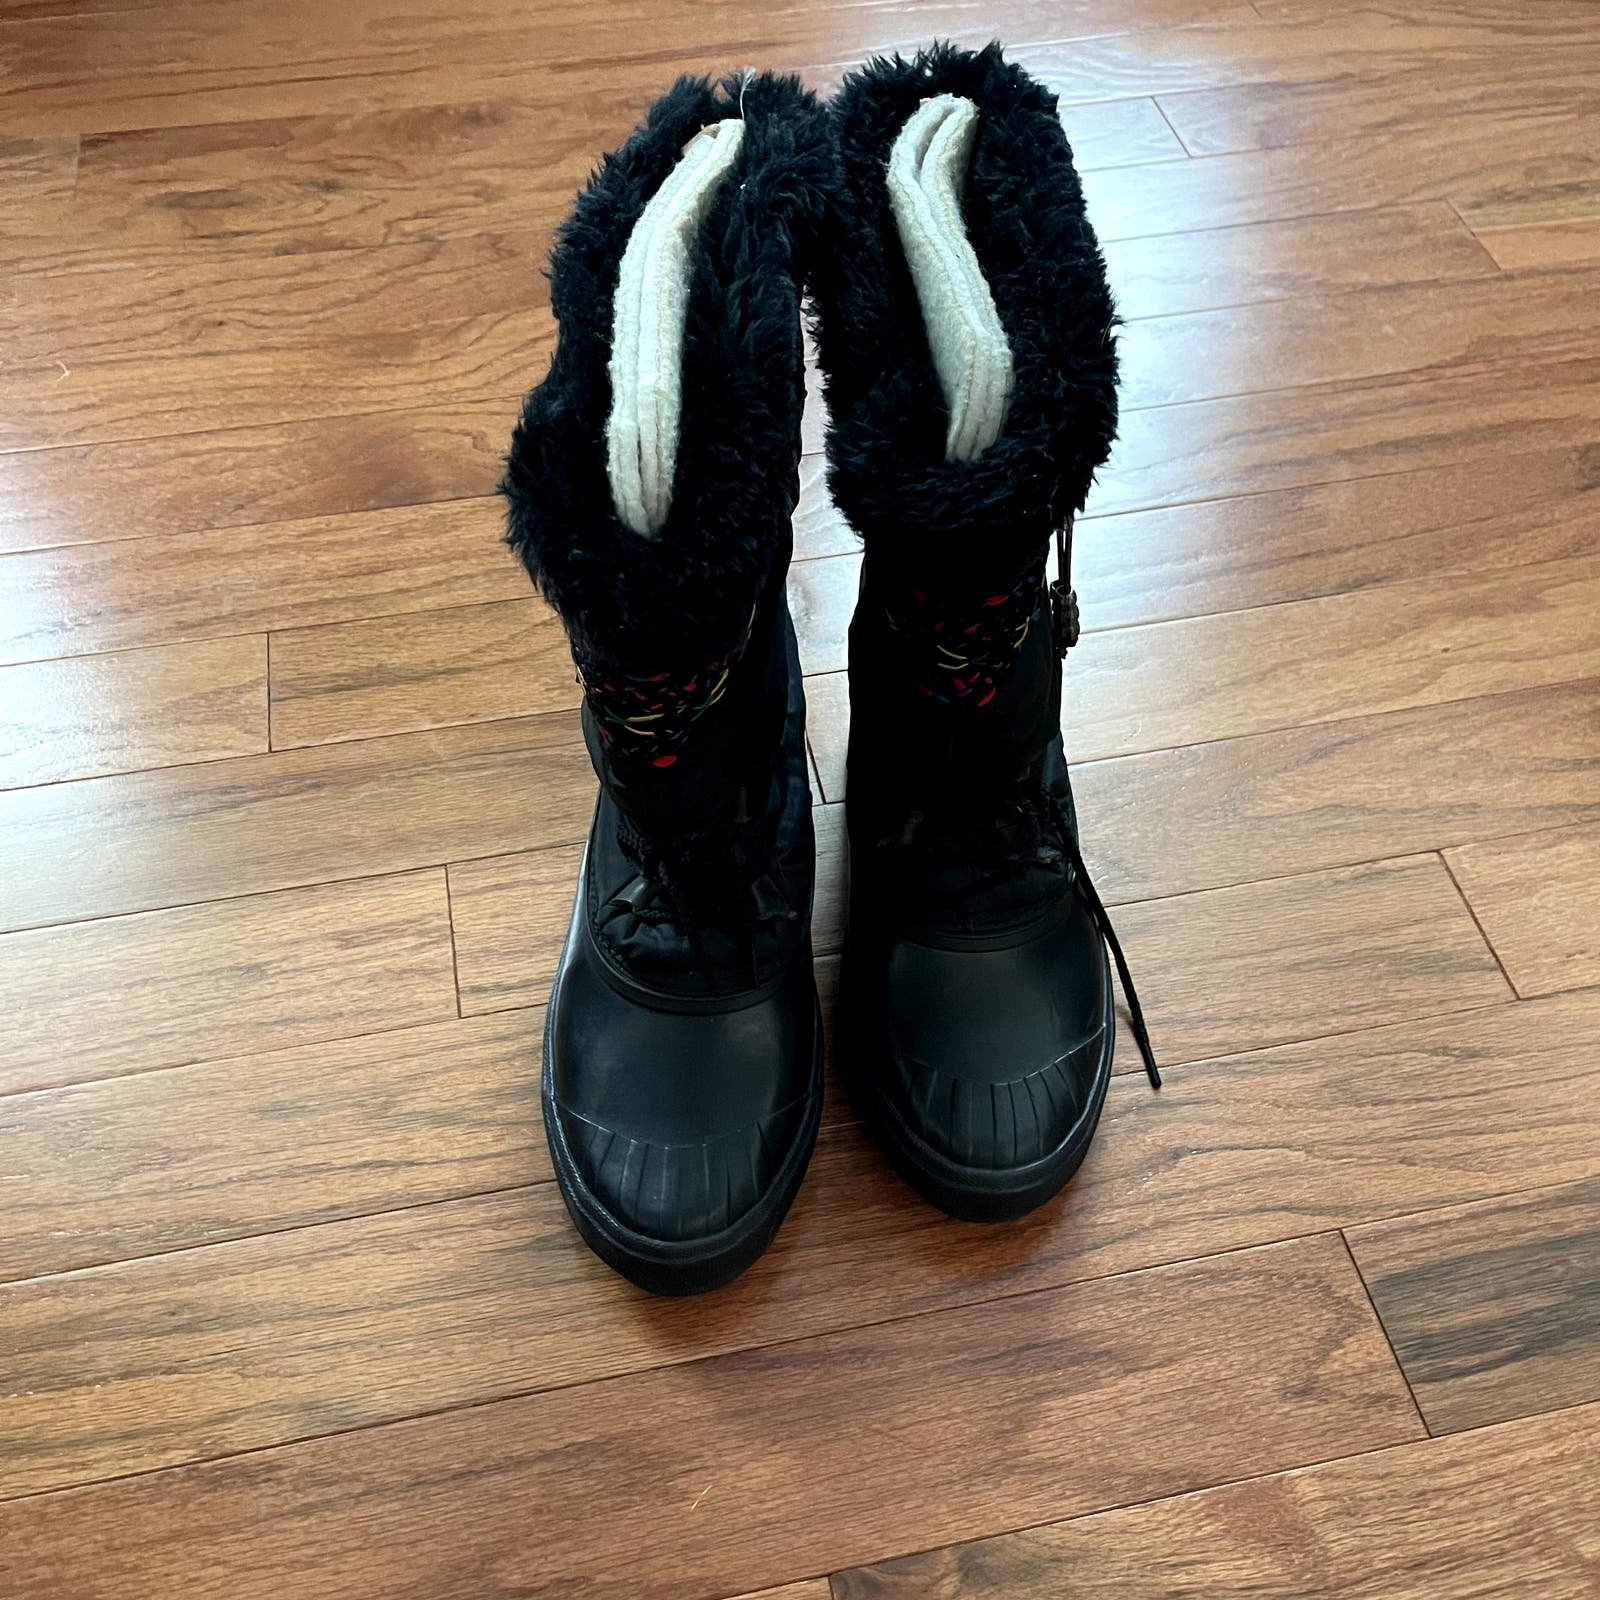 Sorel Black Multicolored Tie Up Winter Boots Size 9 cSLMabf9K